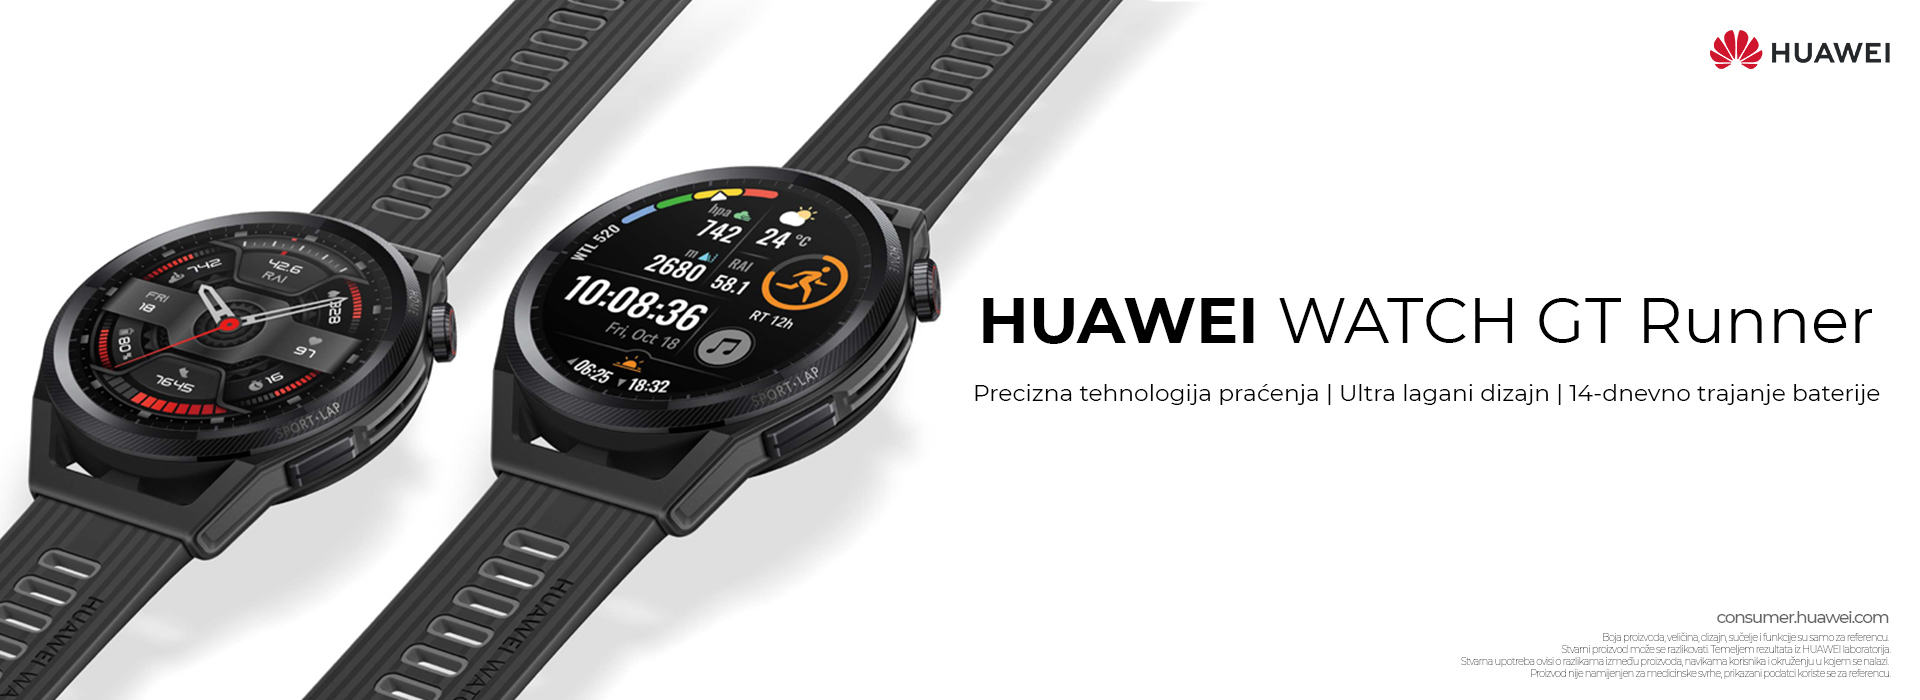 HUAWEI Watch GT Runner - Najbolji pametni sat za trkače